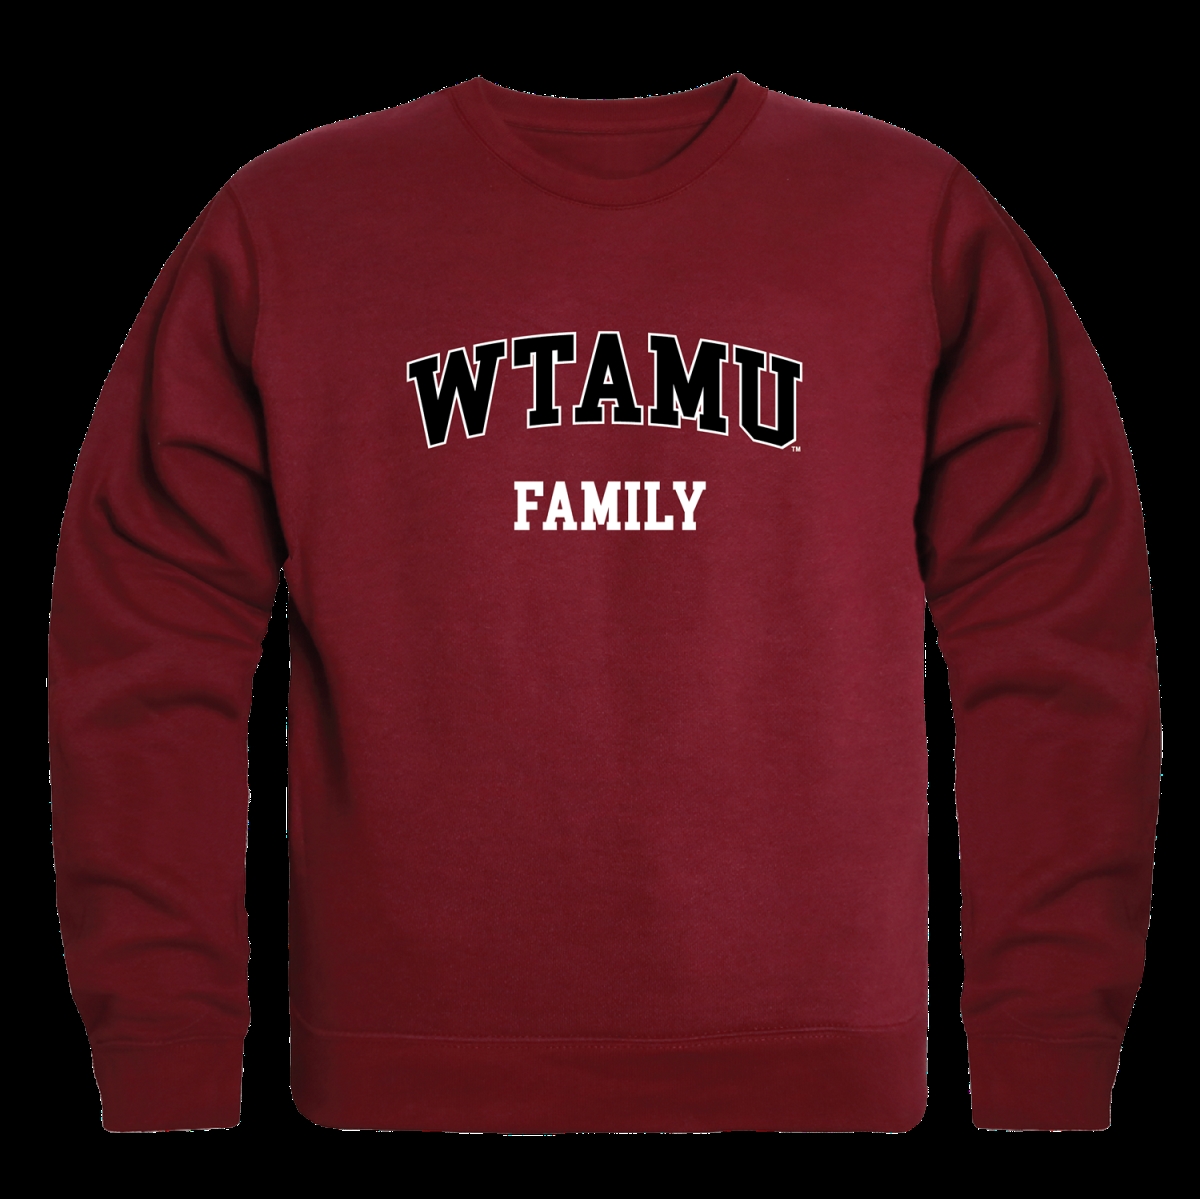 572-403-MAR-02 West Texas A&M University Buffaloes Family Crewneck Sweatshirt, Maroon - Medium -  W Republic